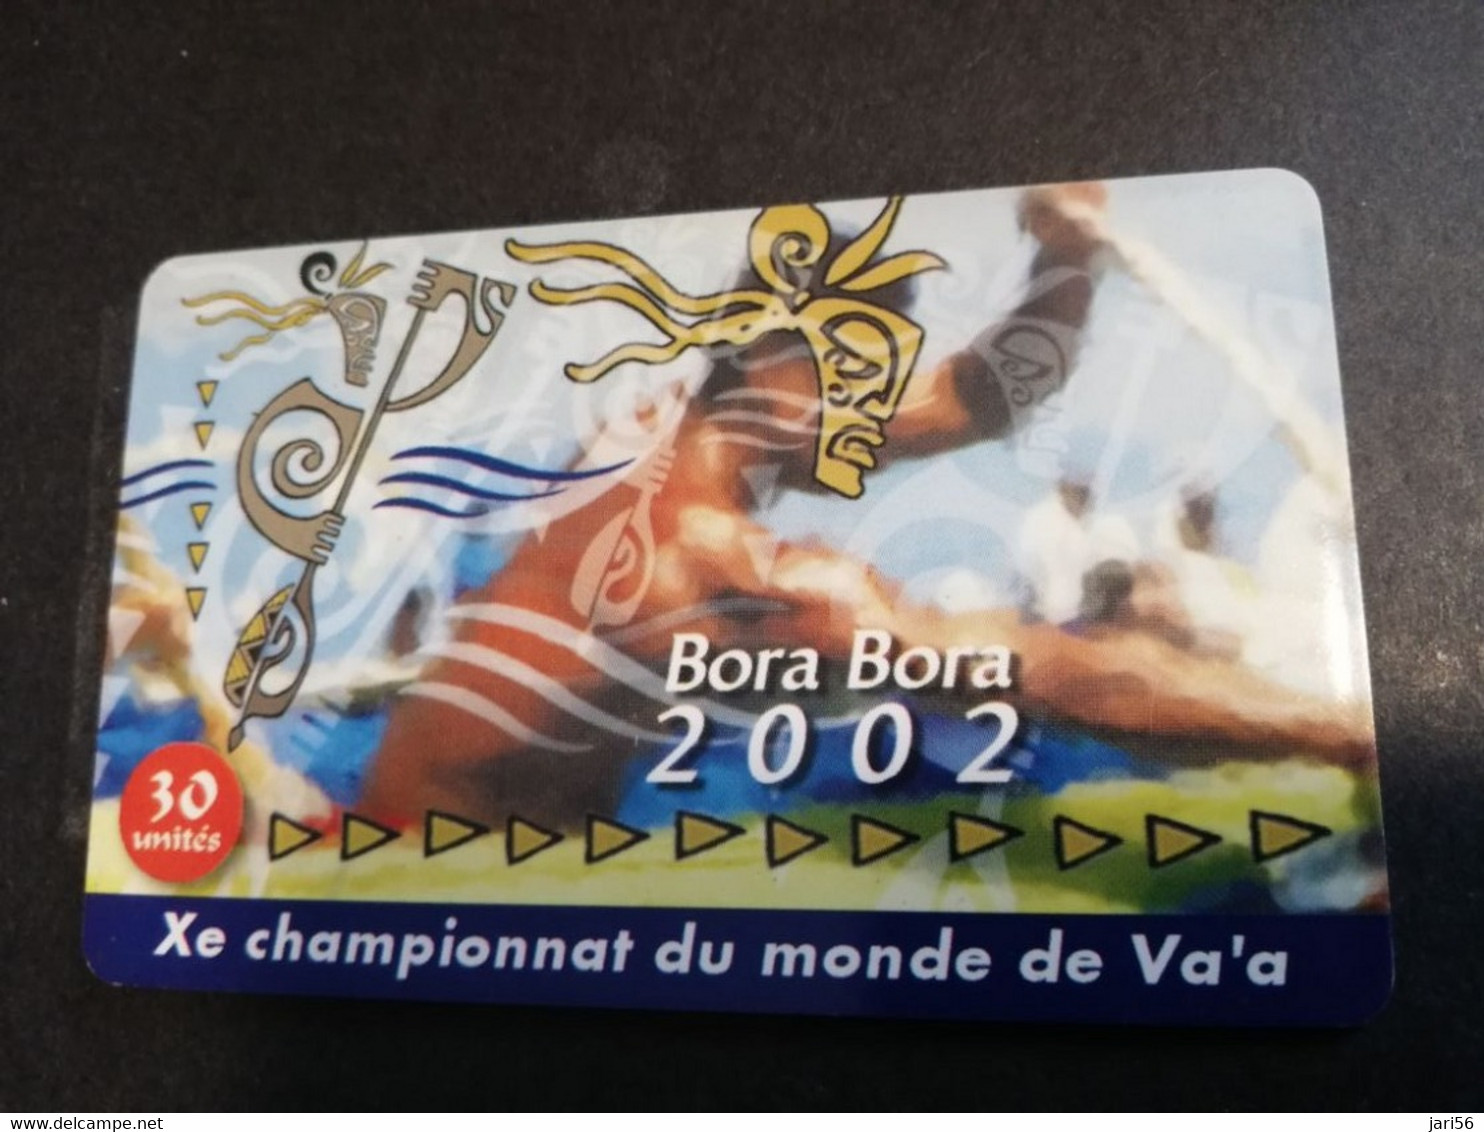 POLINESIA FRANCAISE  CHIPCARD  30   BORA BORA 2002 CHAMPIONNAT DU MONDE DE VAA               **4936** - French Polynesia